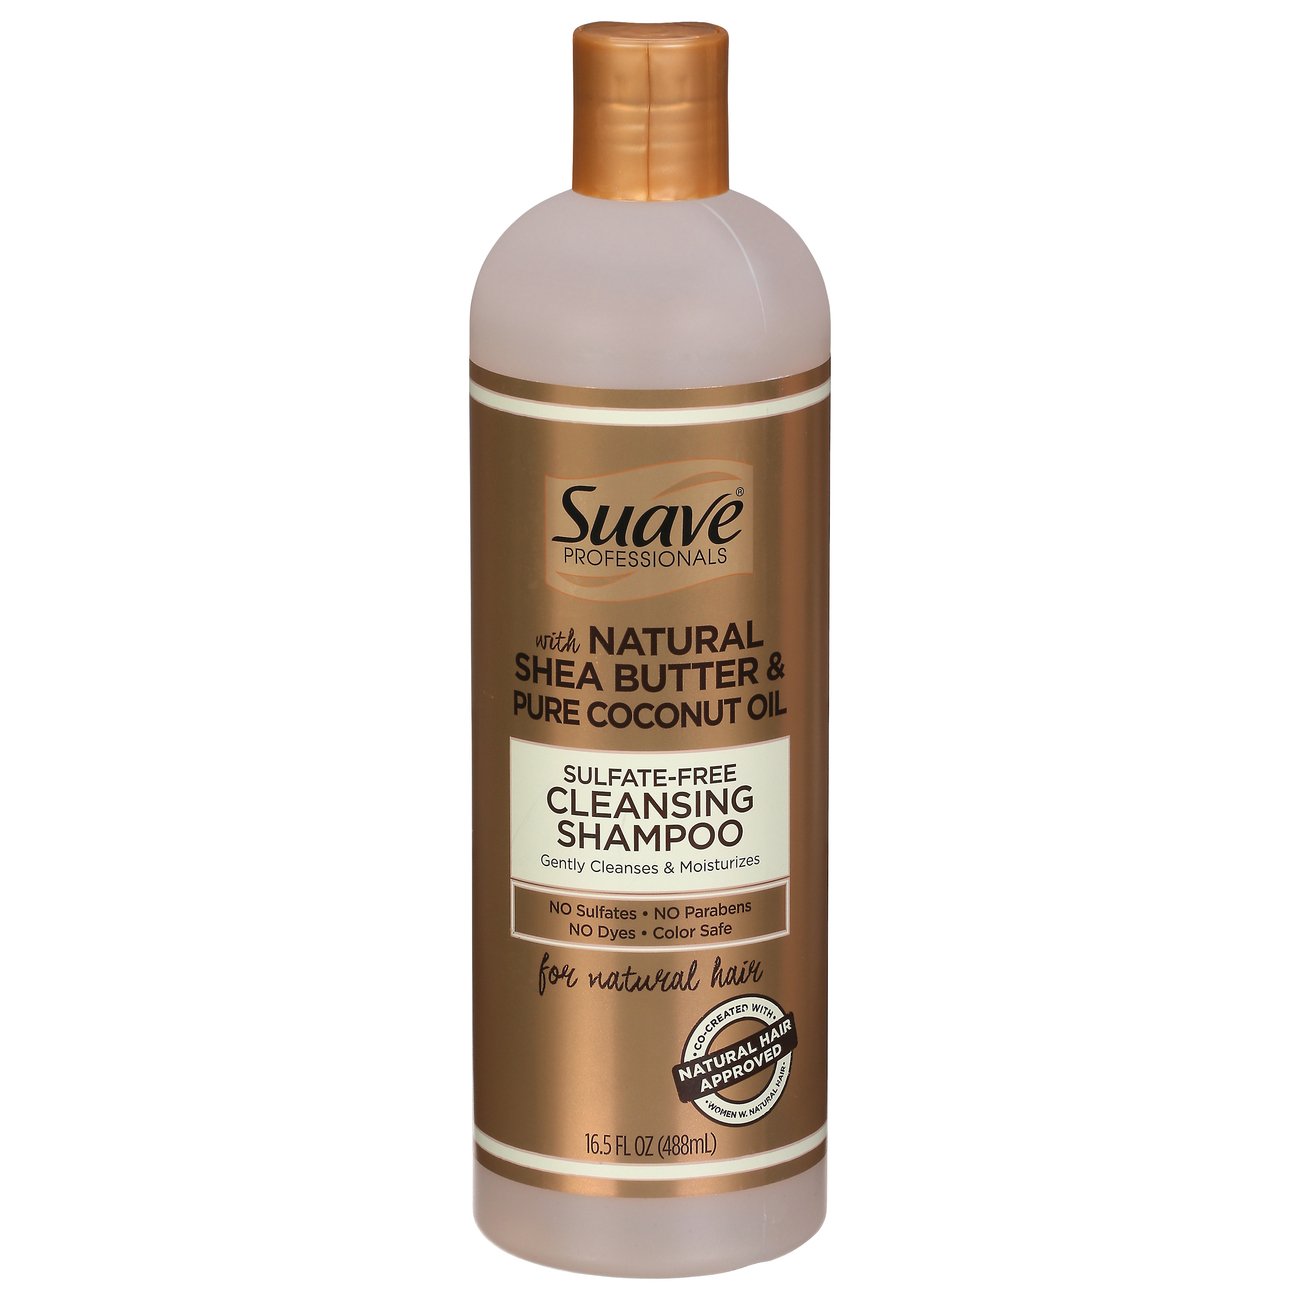 Suave Professionals Sulfate-Free Cleansing Shampoo - Shop Shampoo H-E-B